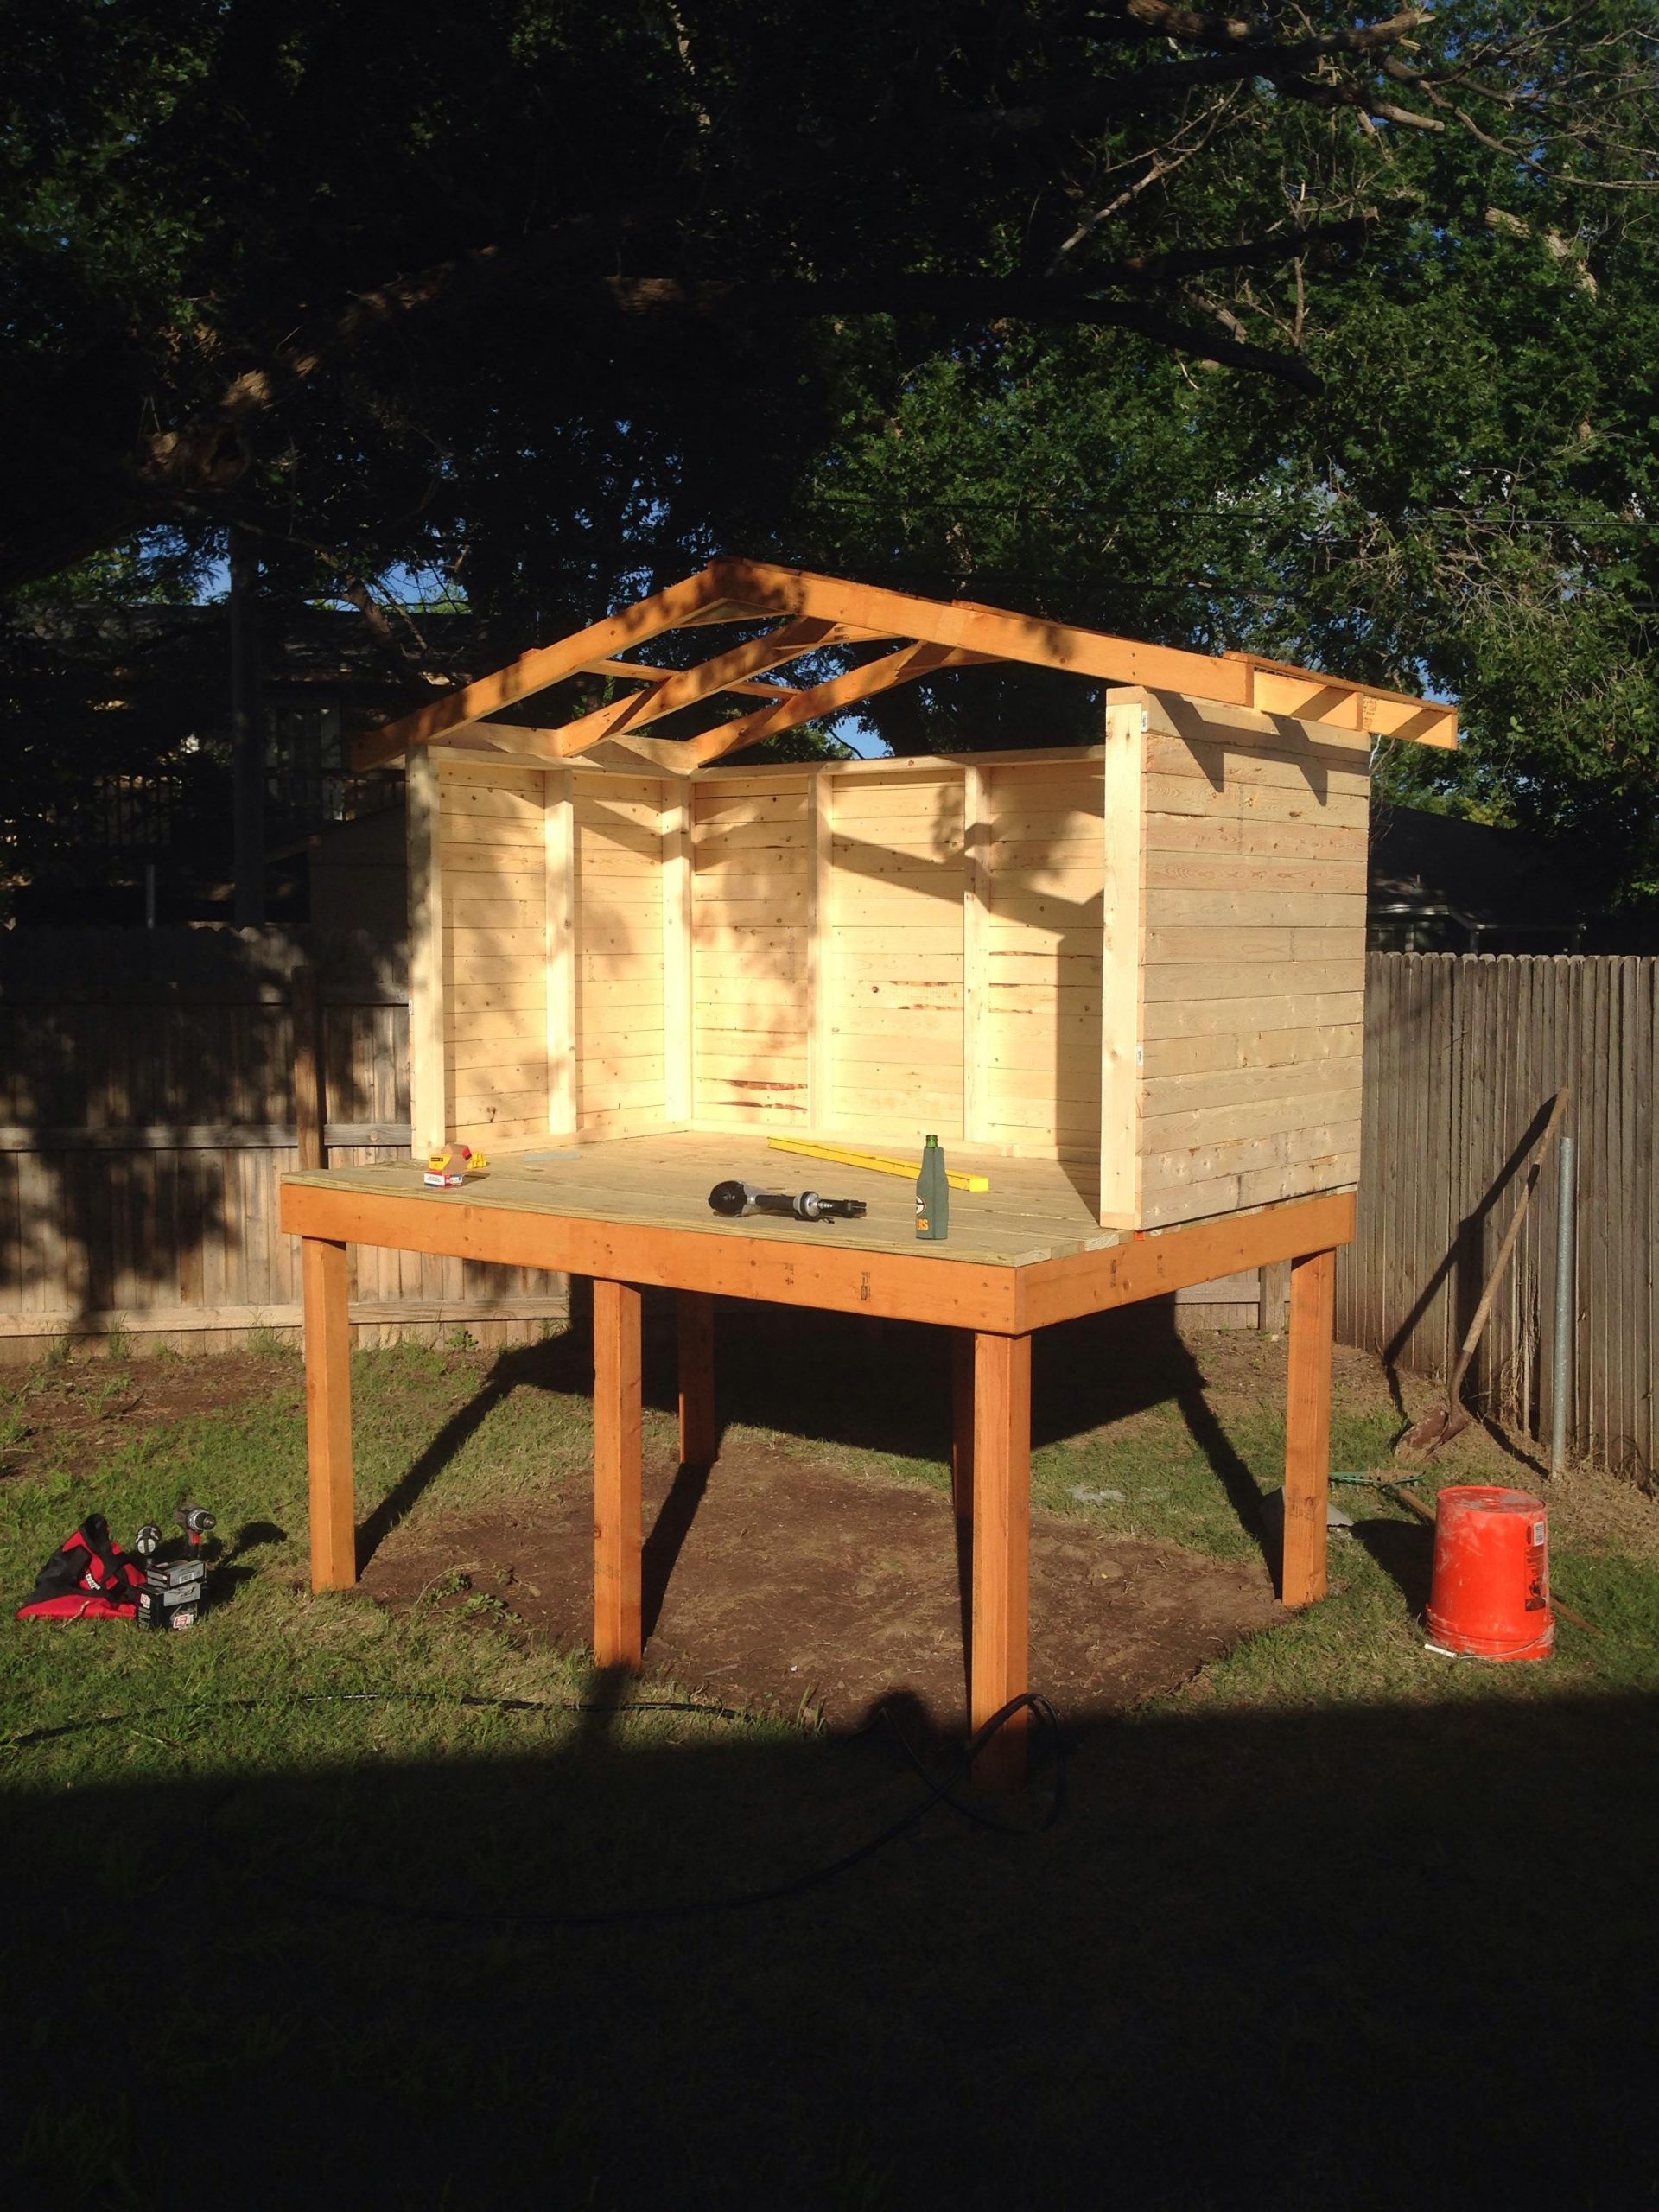 Diy Backyard Fort
 Dad Chronicles His DIY Backyard Fort Project